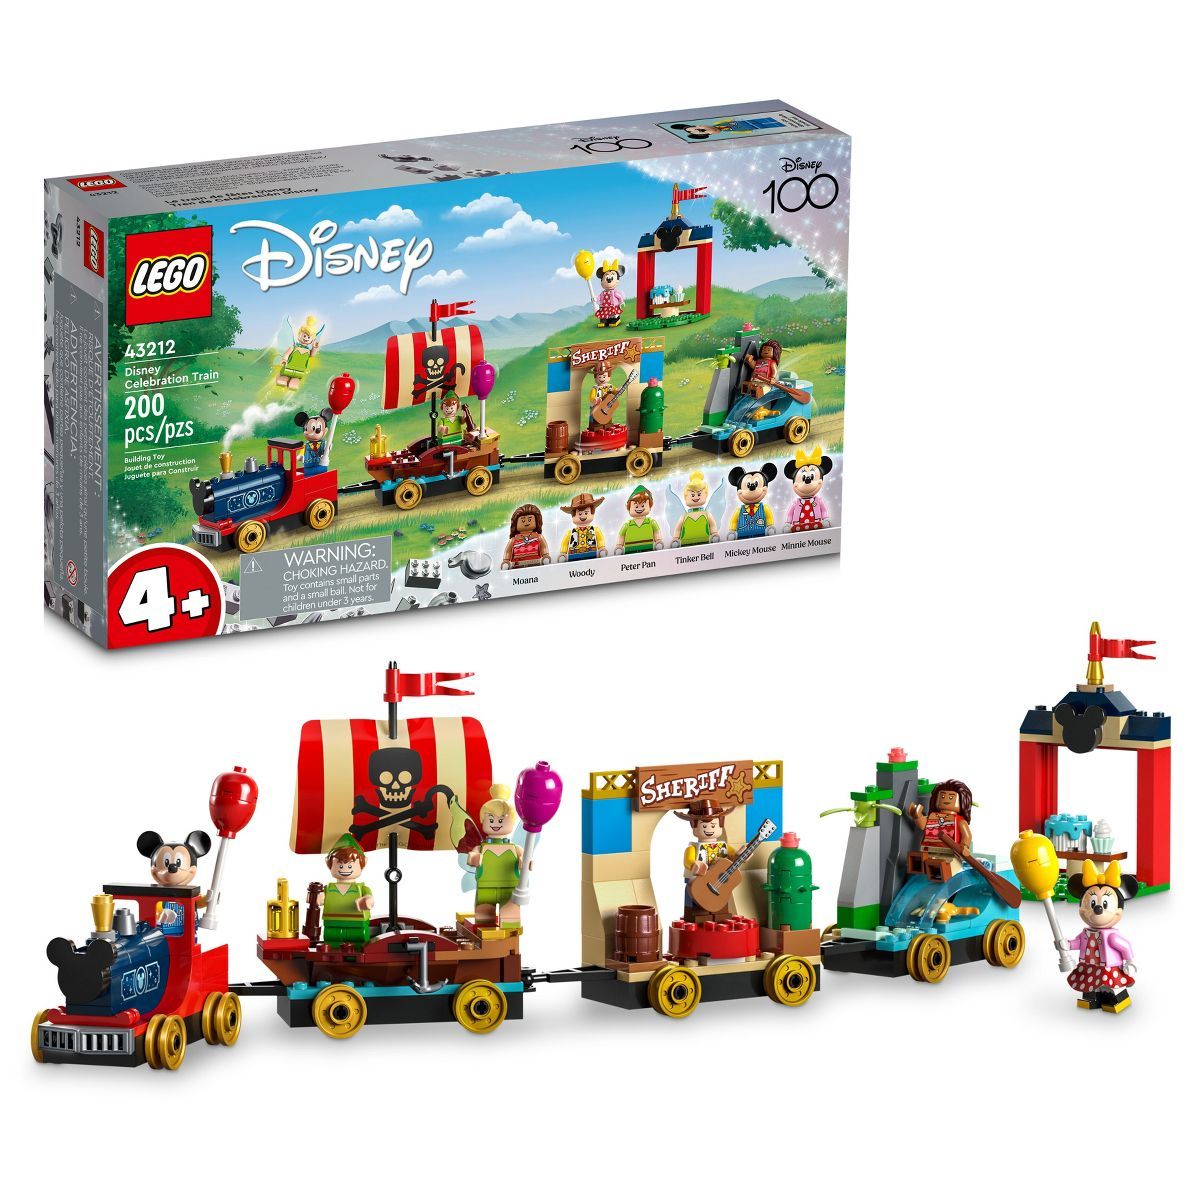 LEGO Disney Celebration Train Toy 43212 | Target